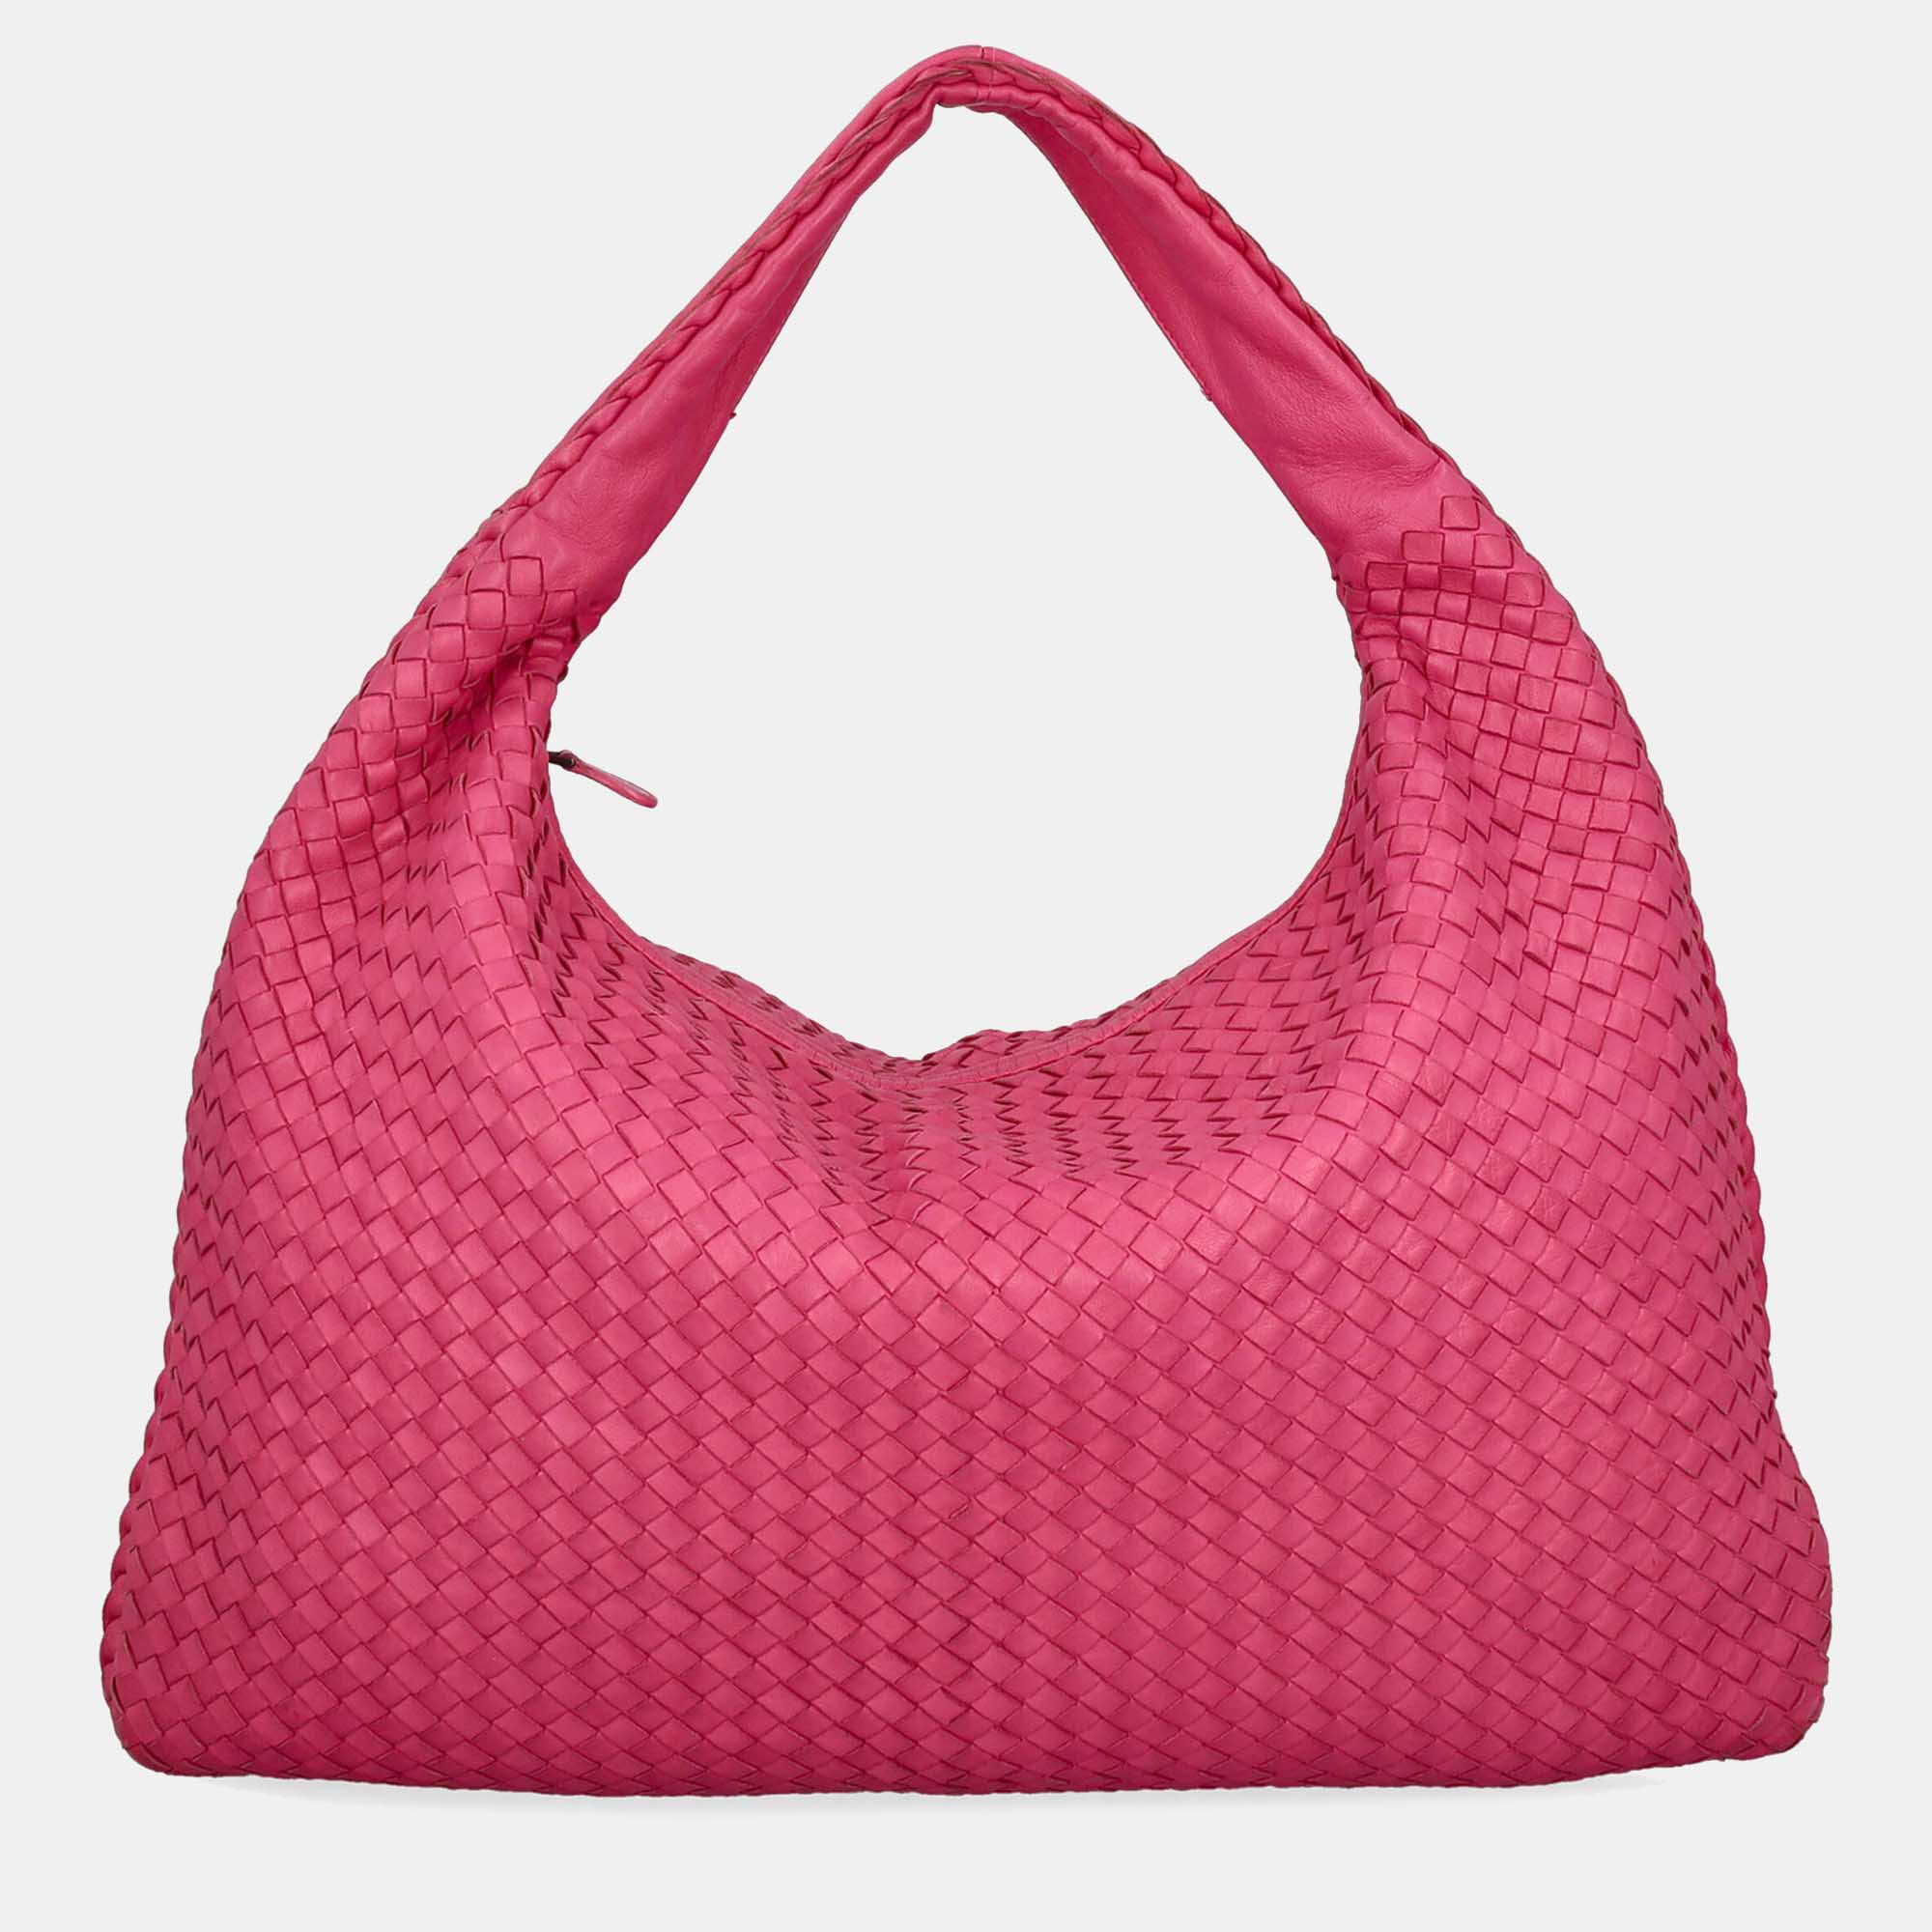 Bottega Veneta  Women's Leather Hobo Bag - Pink - One Size